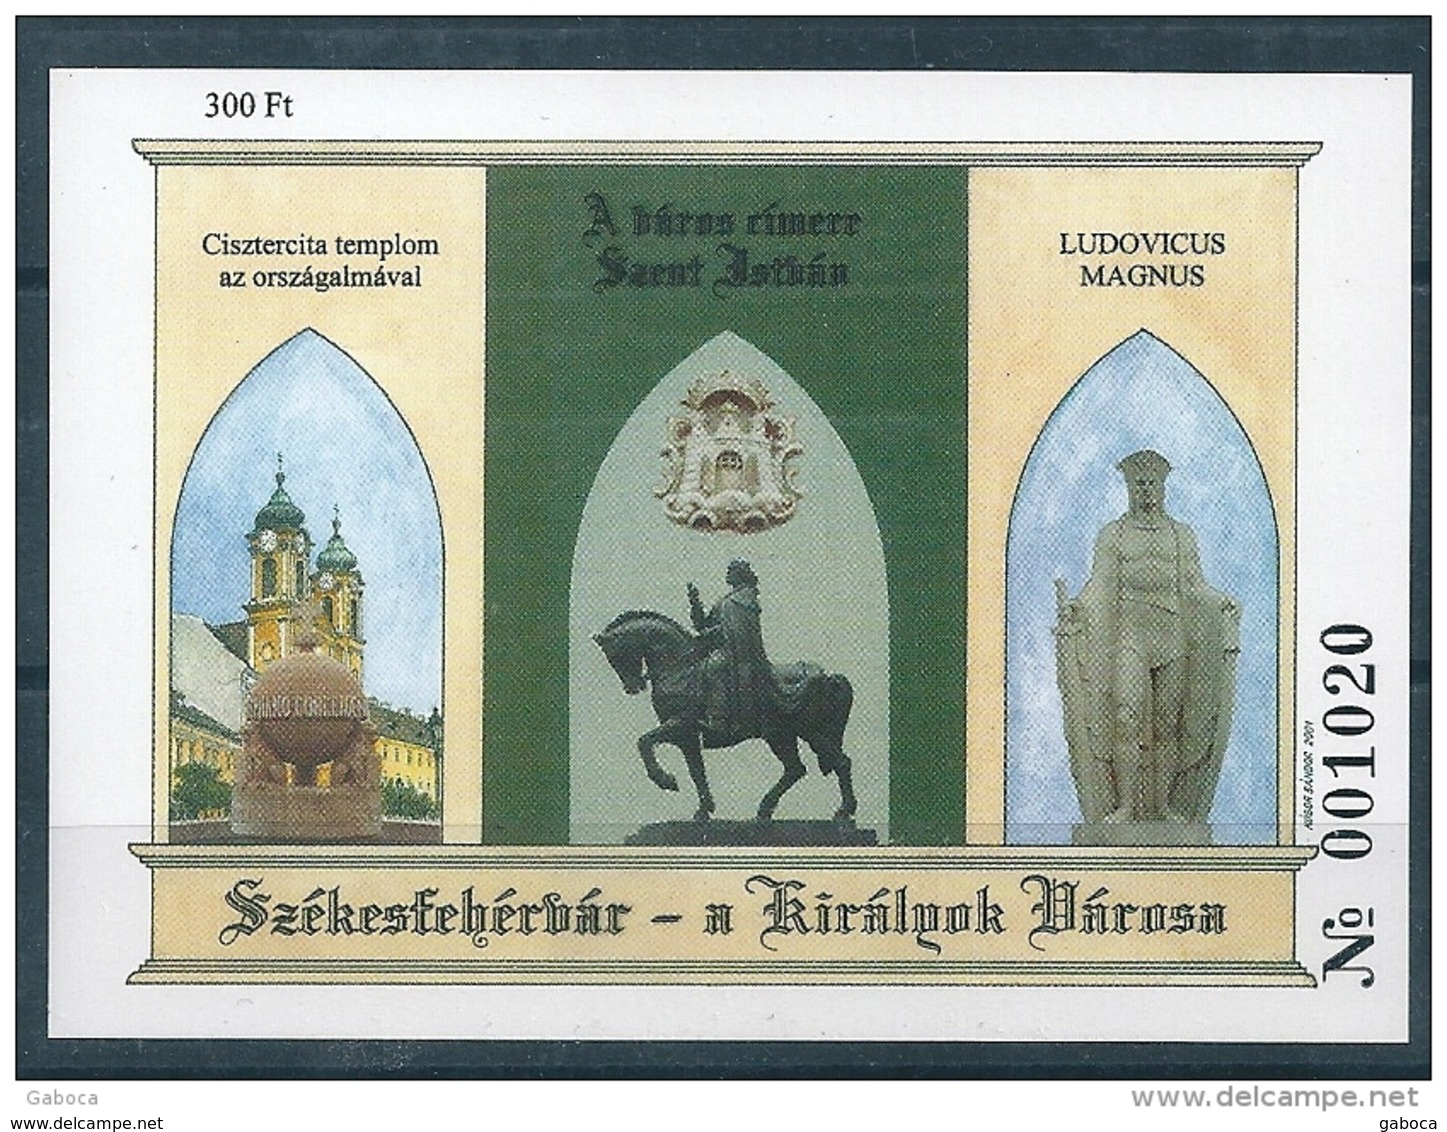 1370 Hungary 2001 Szekesfehervar City Of The Kings Memorial Sheet MNH - Commemorative Sheets